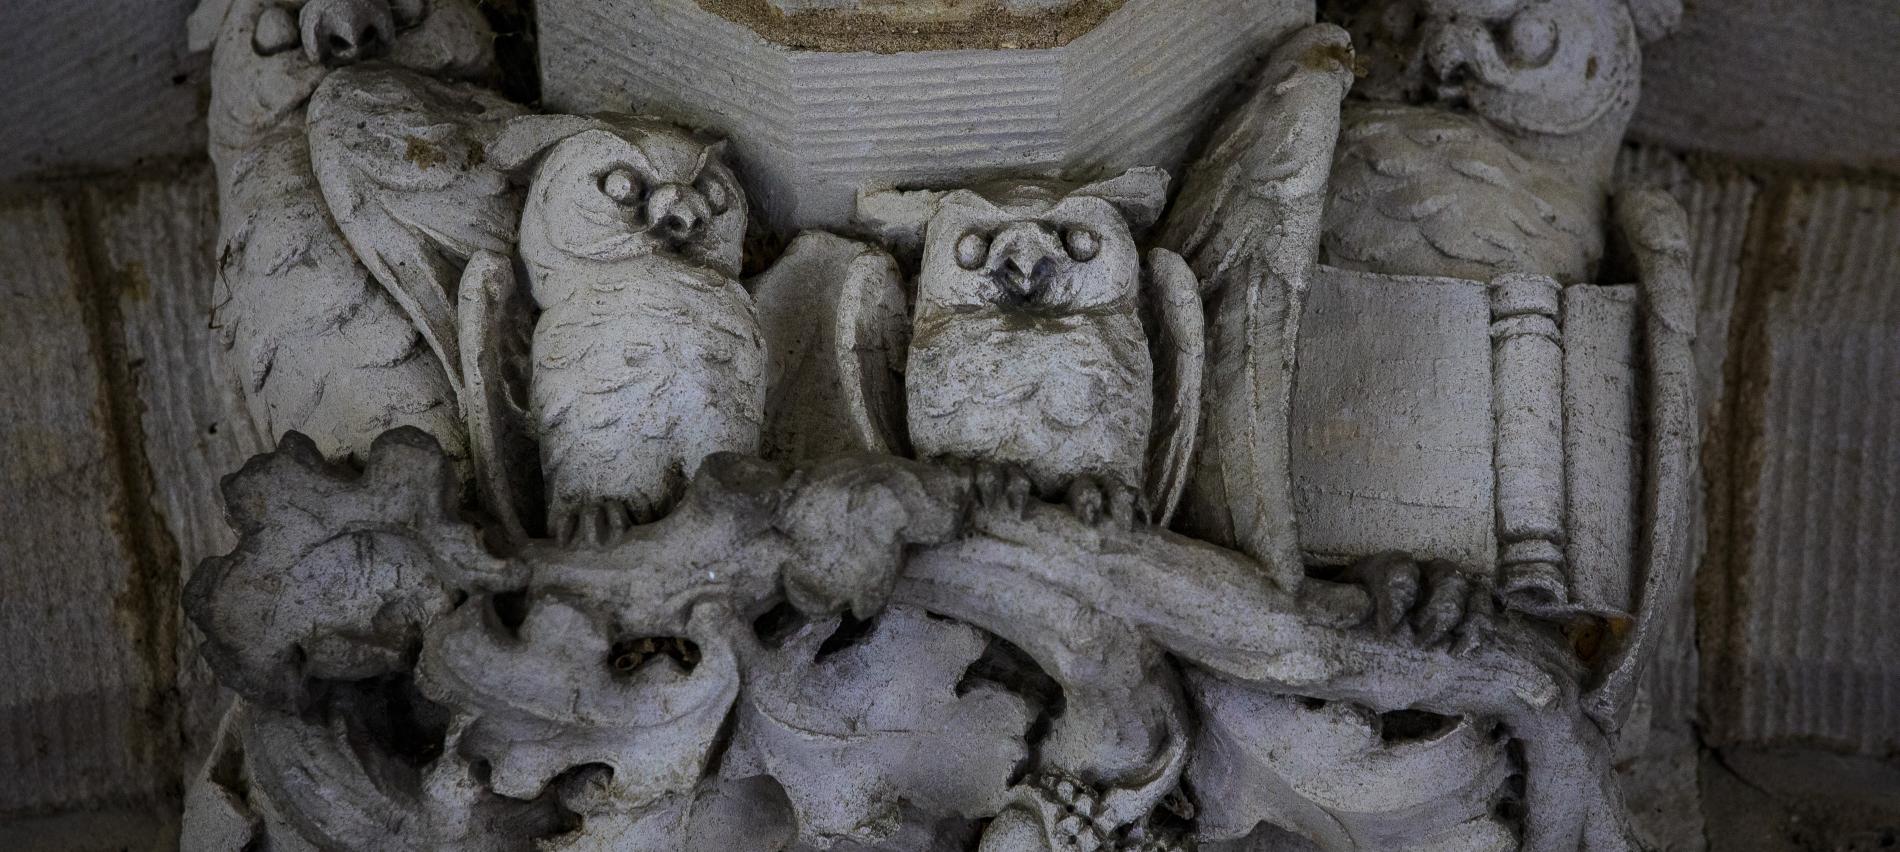 owl ornamentation on building